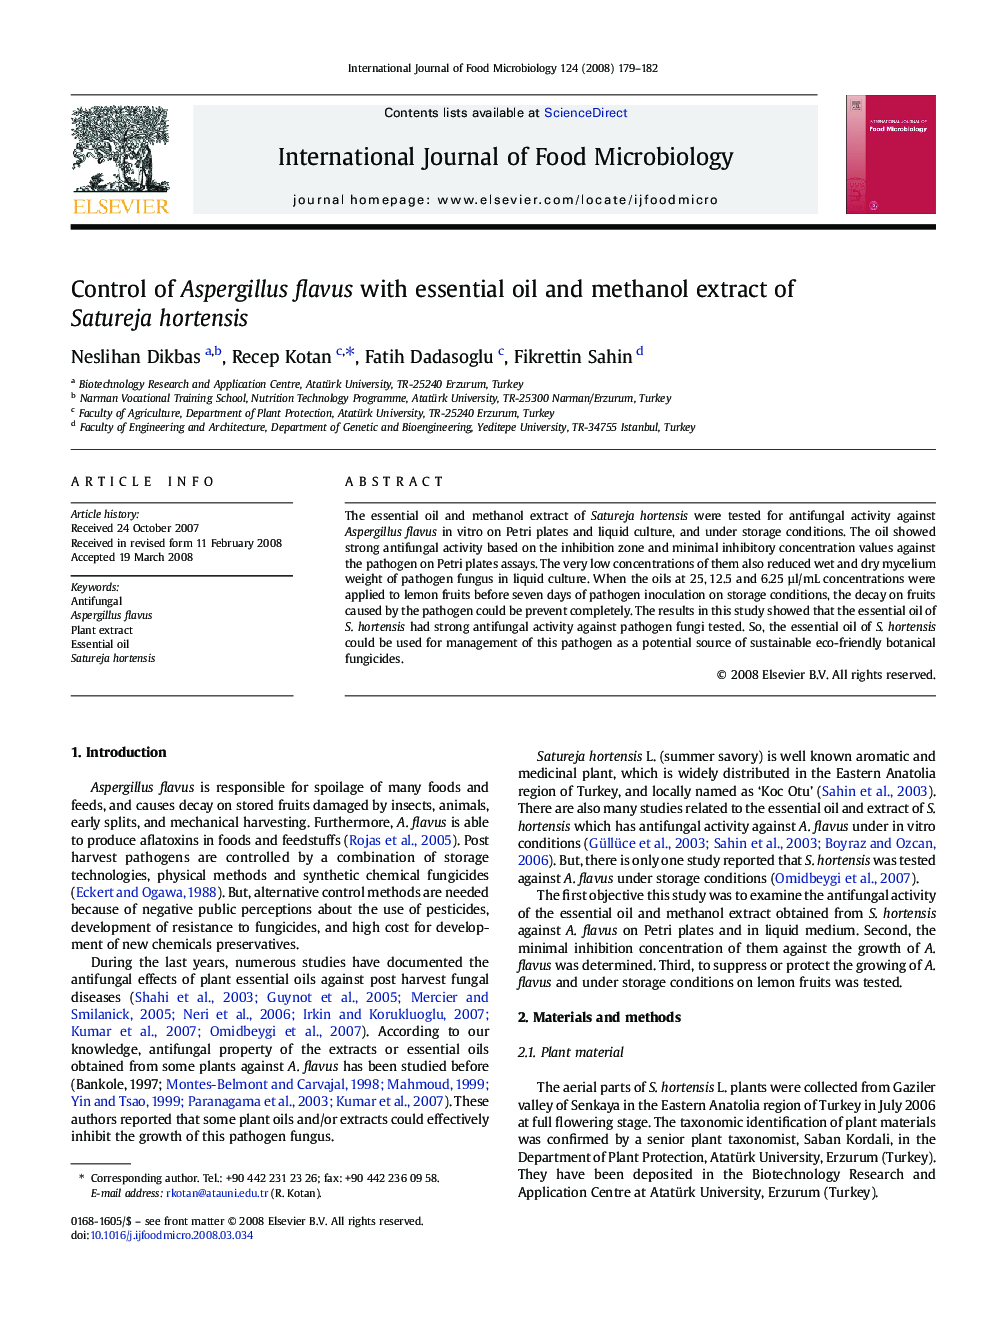 Control of Aspergillus flavus with essential oil and methanol extract of Satureja hortensis